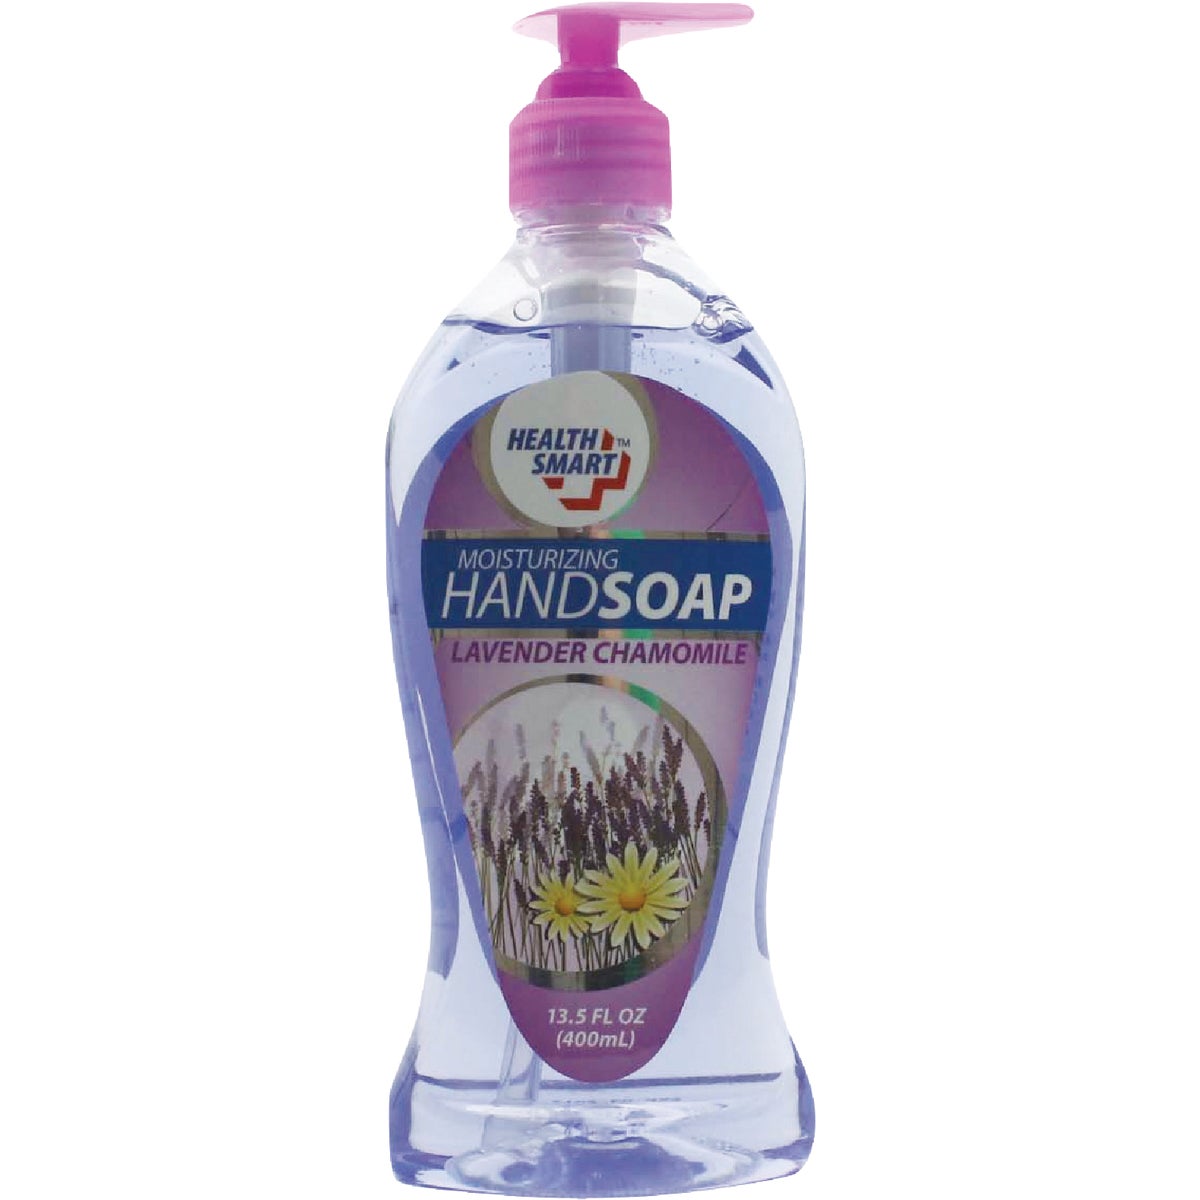 Item 613746, Super soft liquid hand soap. Protective, moisturizing formula.